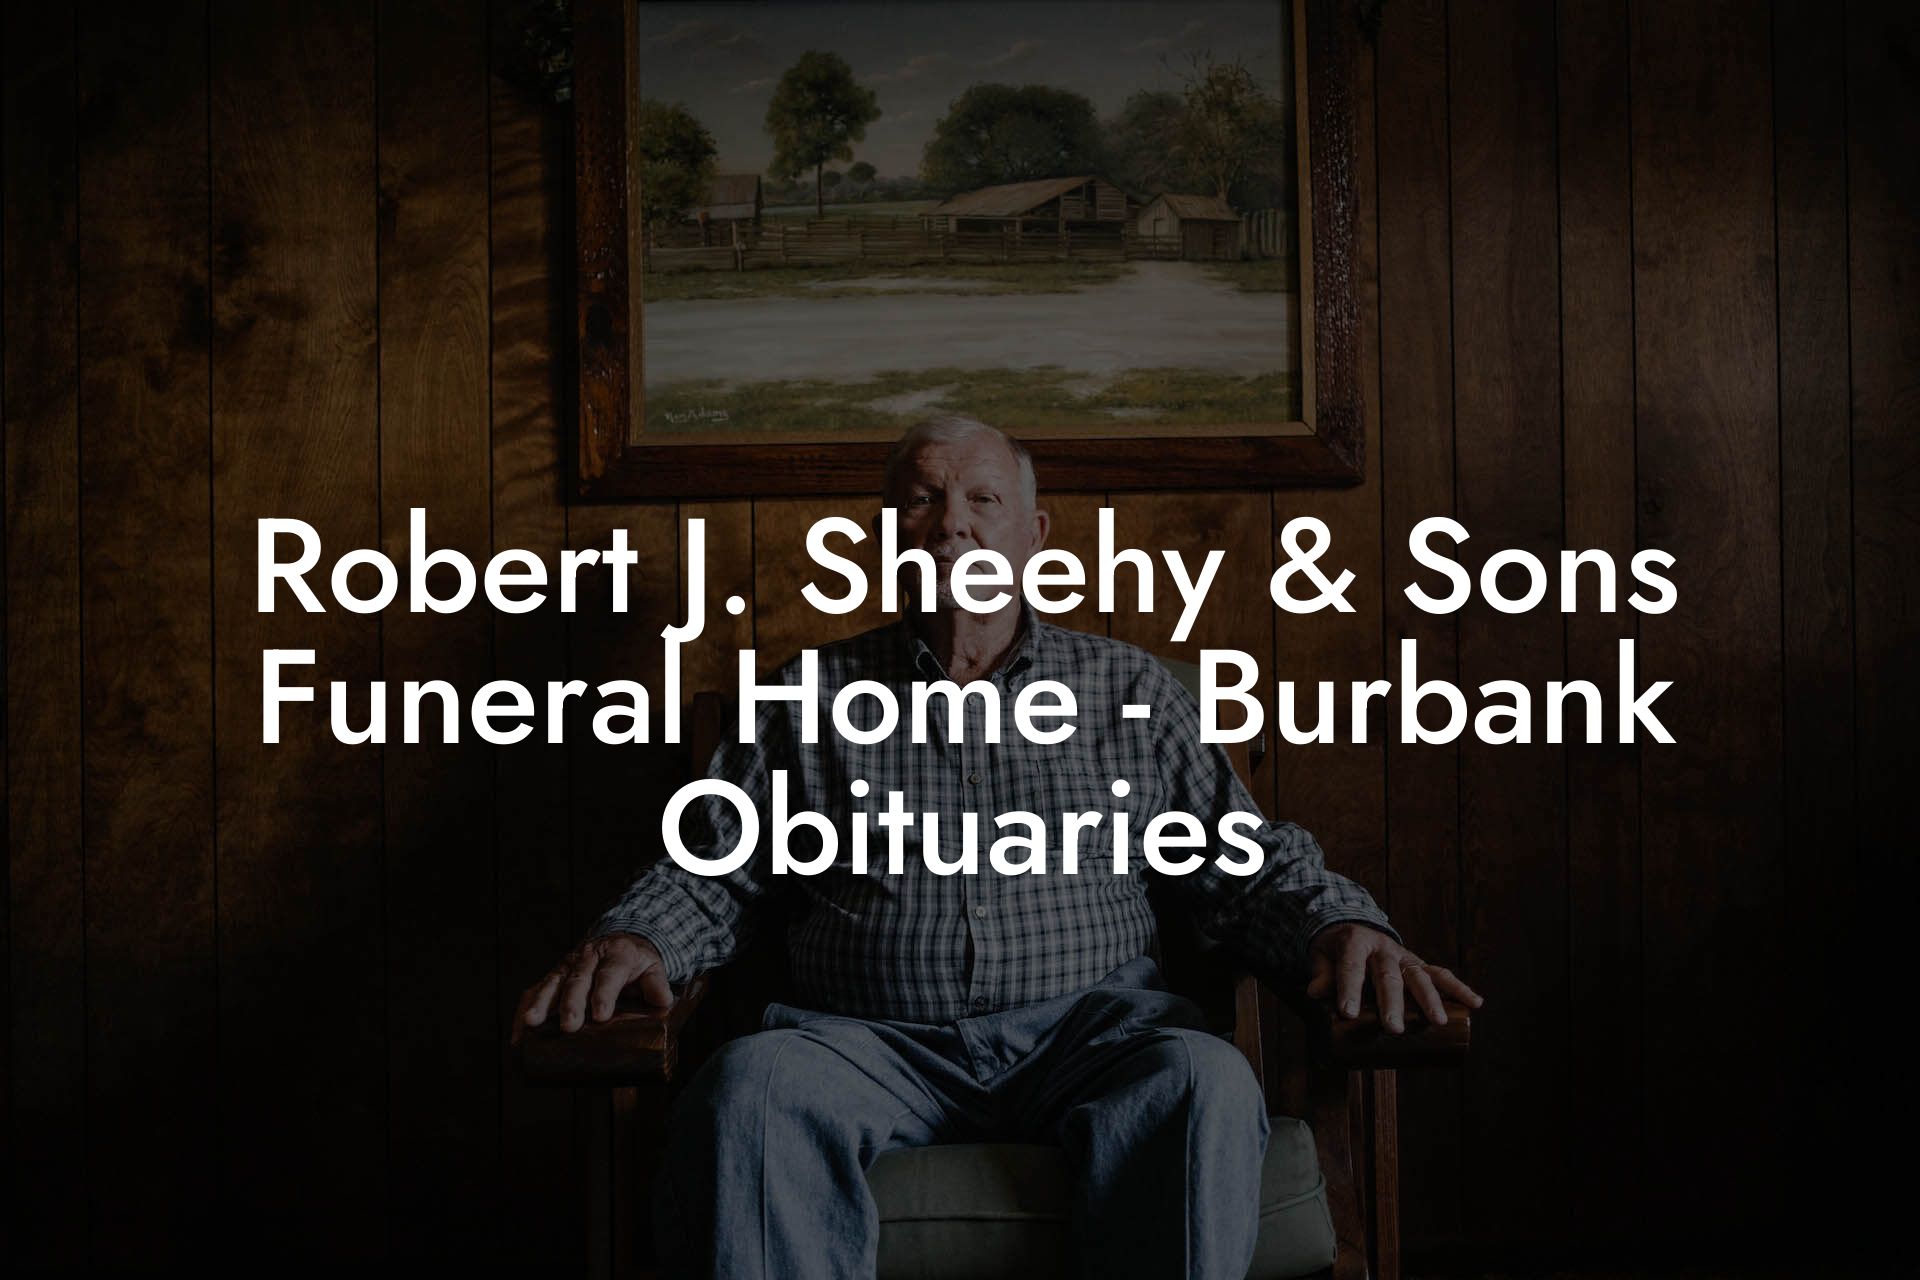 Robert J. Sheehy & Sons Funeral Home - Burbank Obituaries